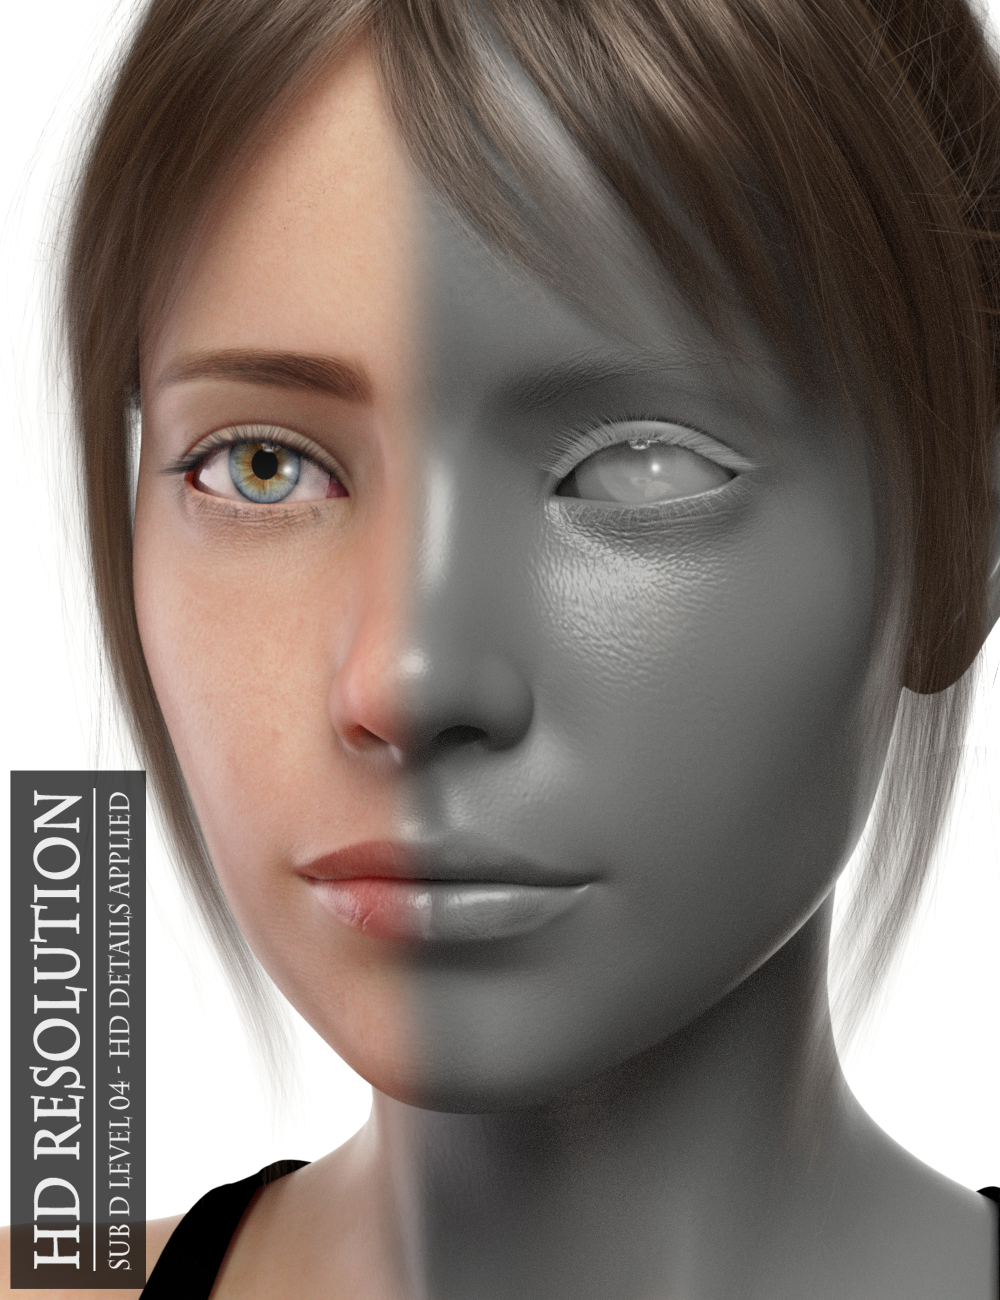 Evangeliya HD For Genesis 8 Female by: iSourceTextures, 3D Models by Daz 3D